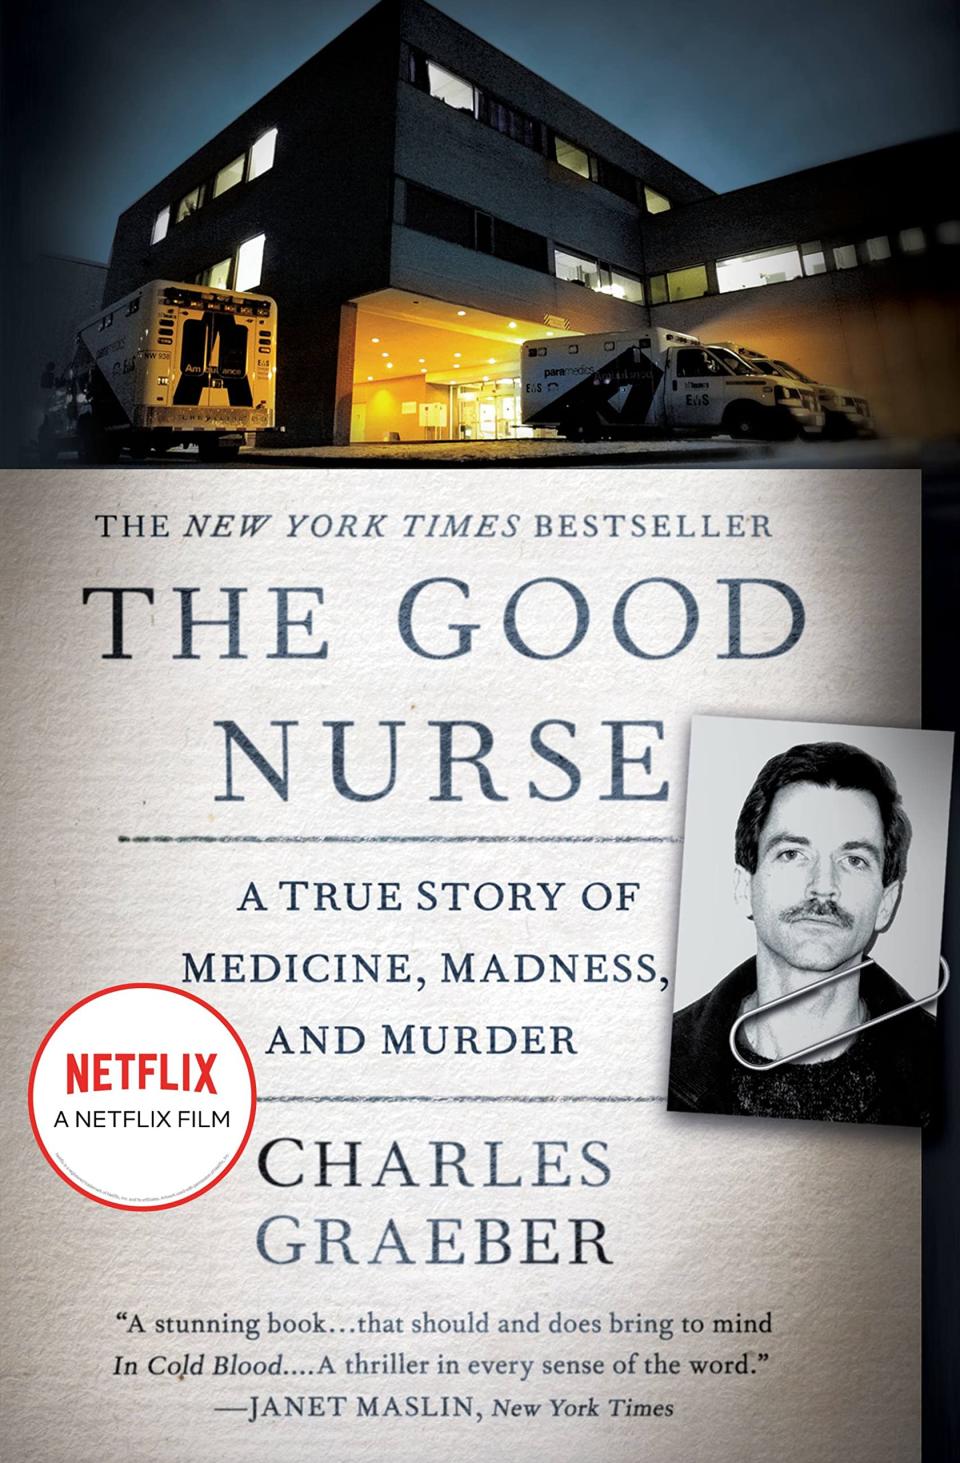 "The Good Nurse" by Charles Graeber